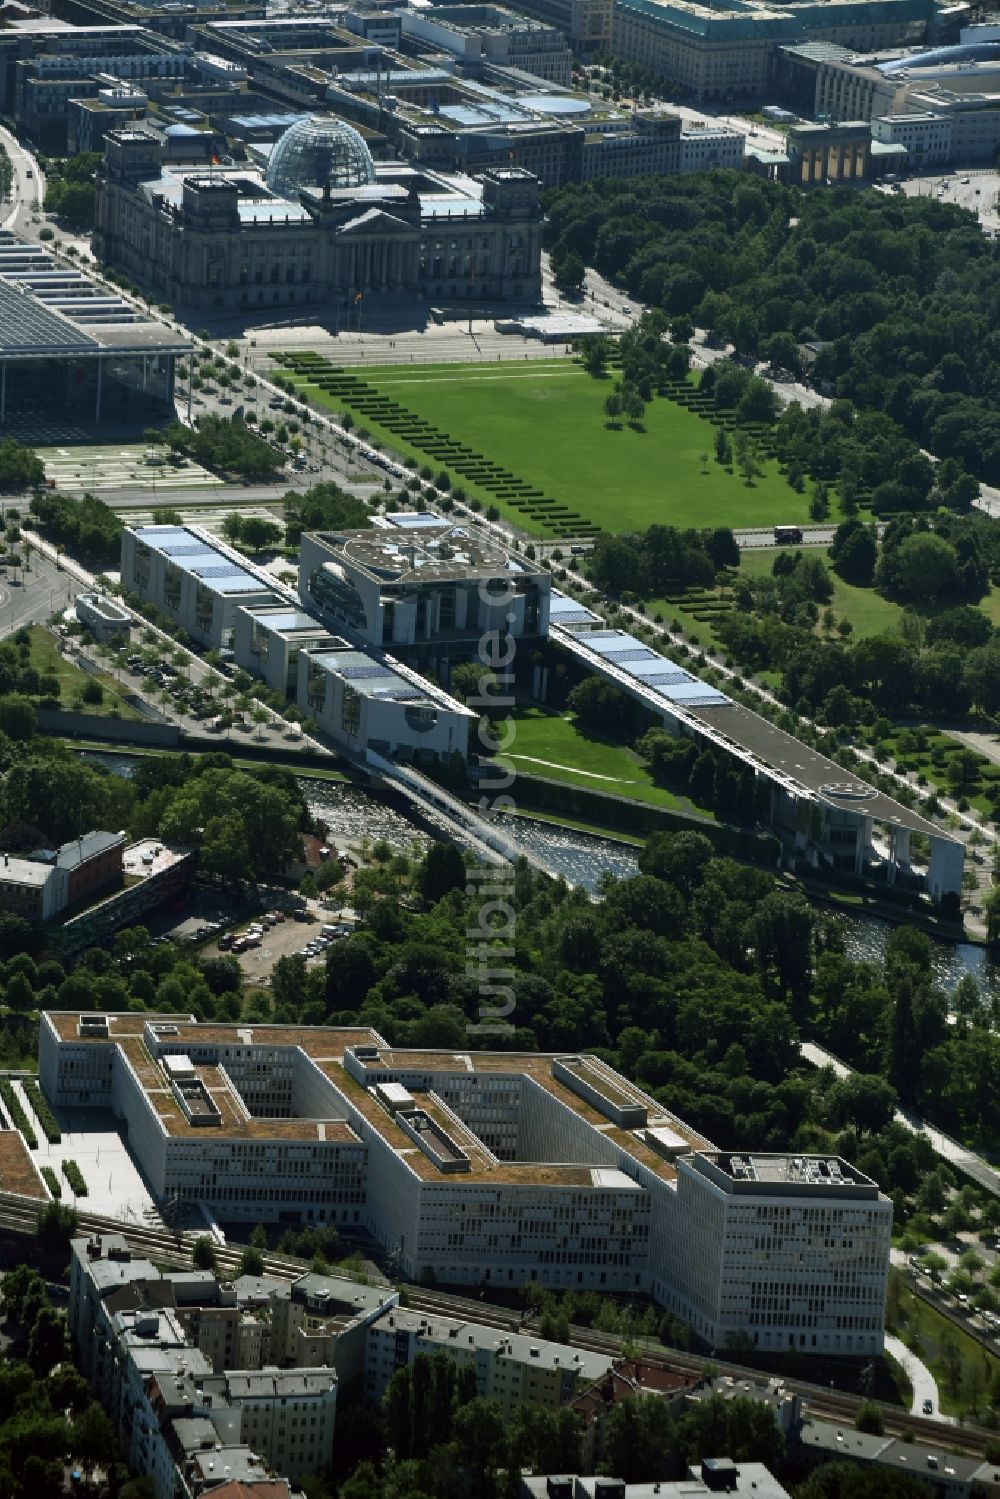 Luftbild Berlin - Neubau des Bundesministeriums des Innern / Innenministerium in Berlin Moabit